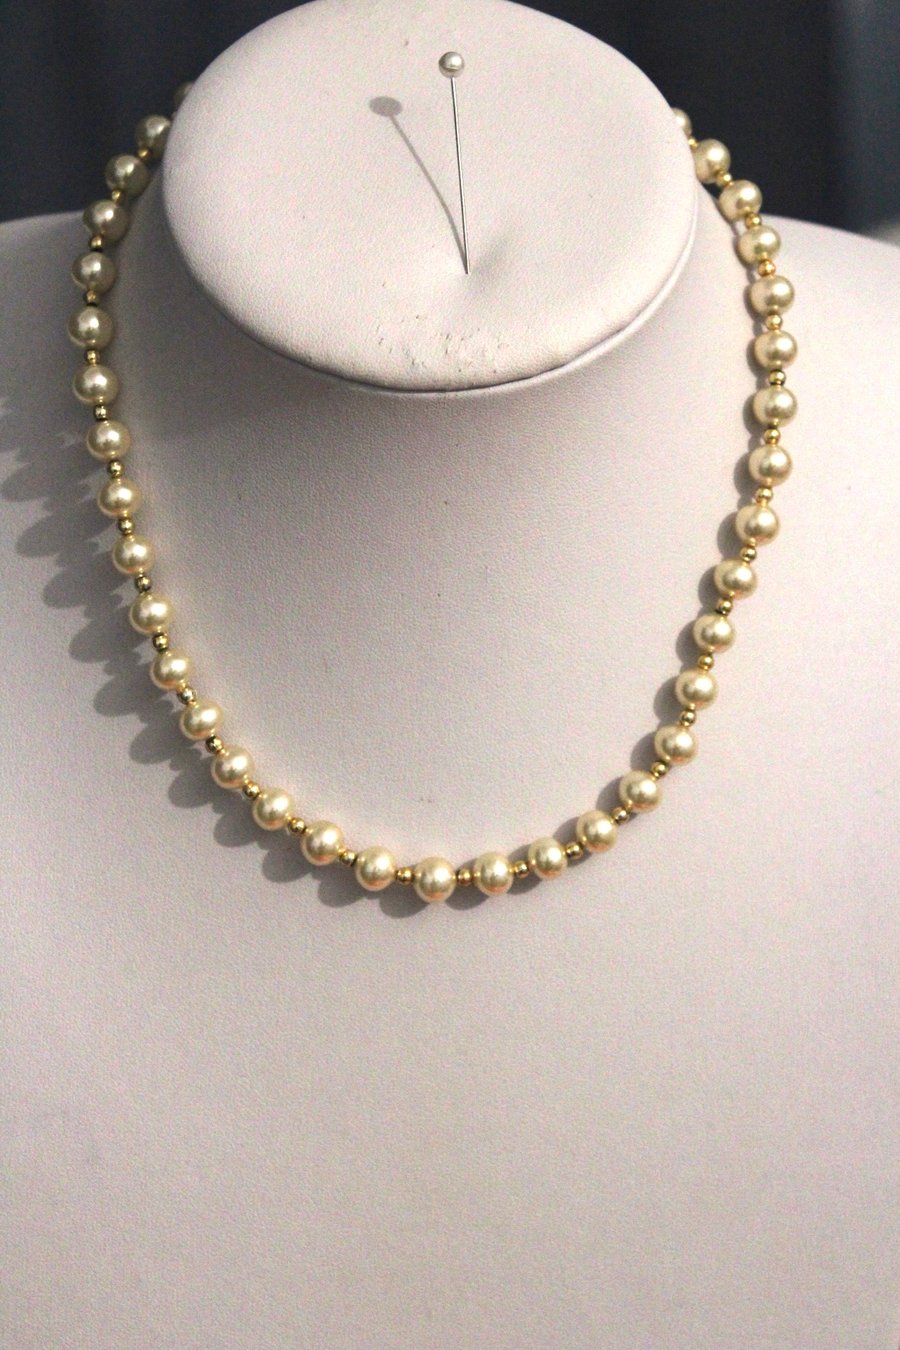 Foe pearl necklace